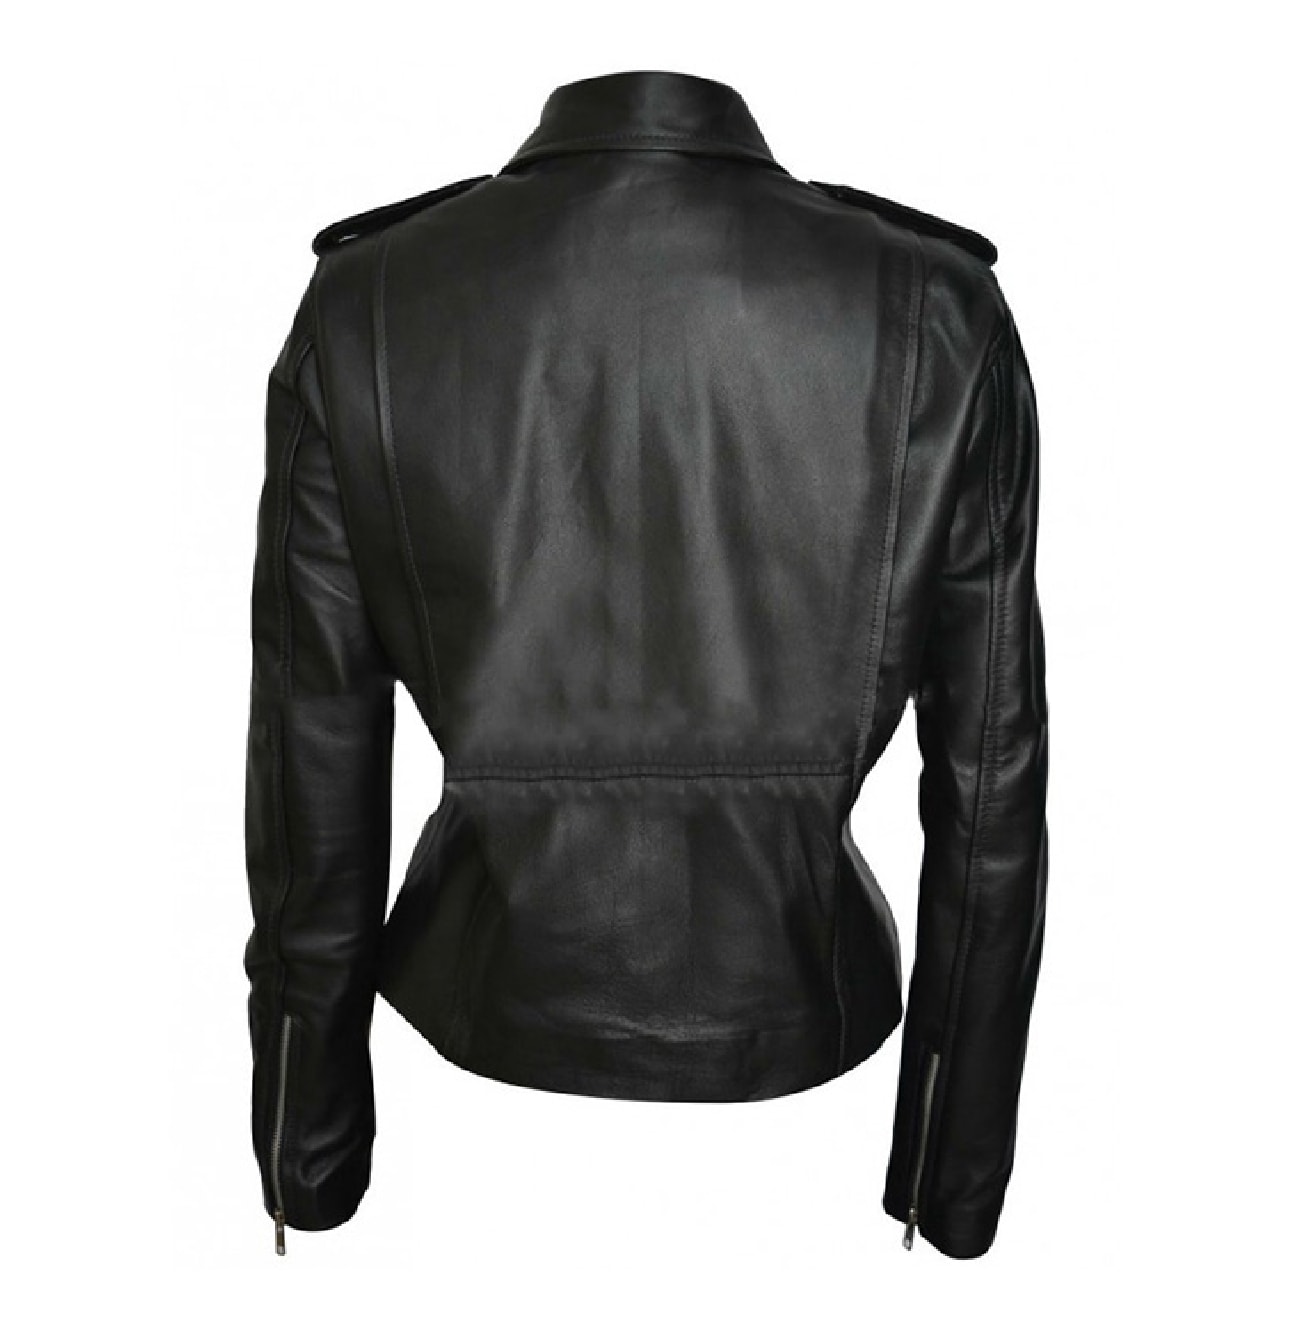 Jessica jones black leather jacket back